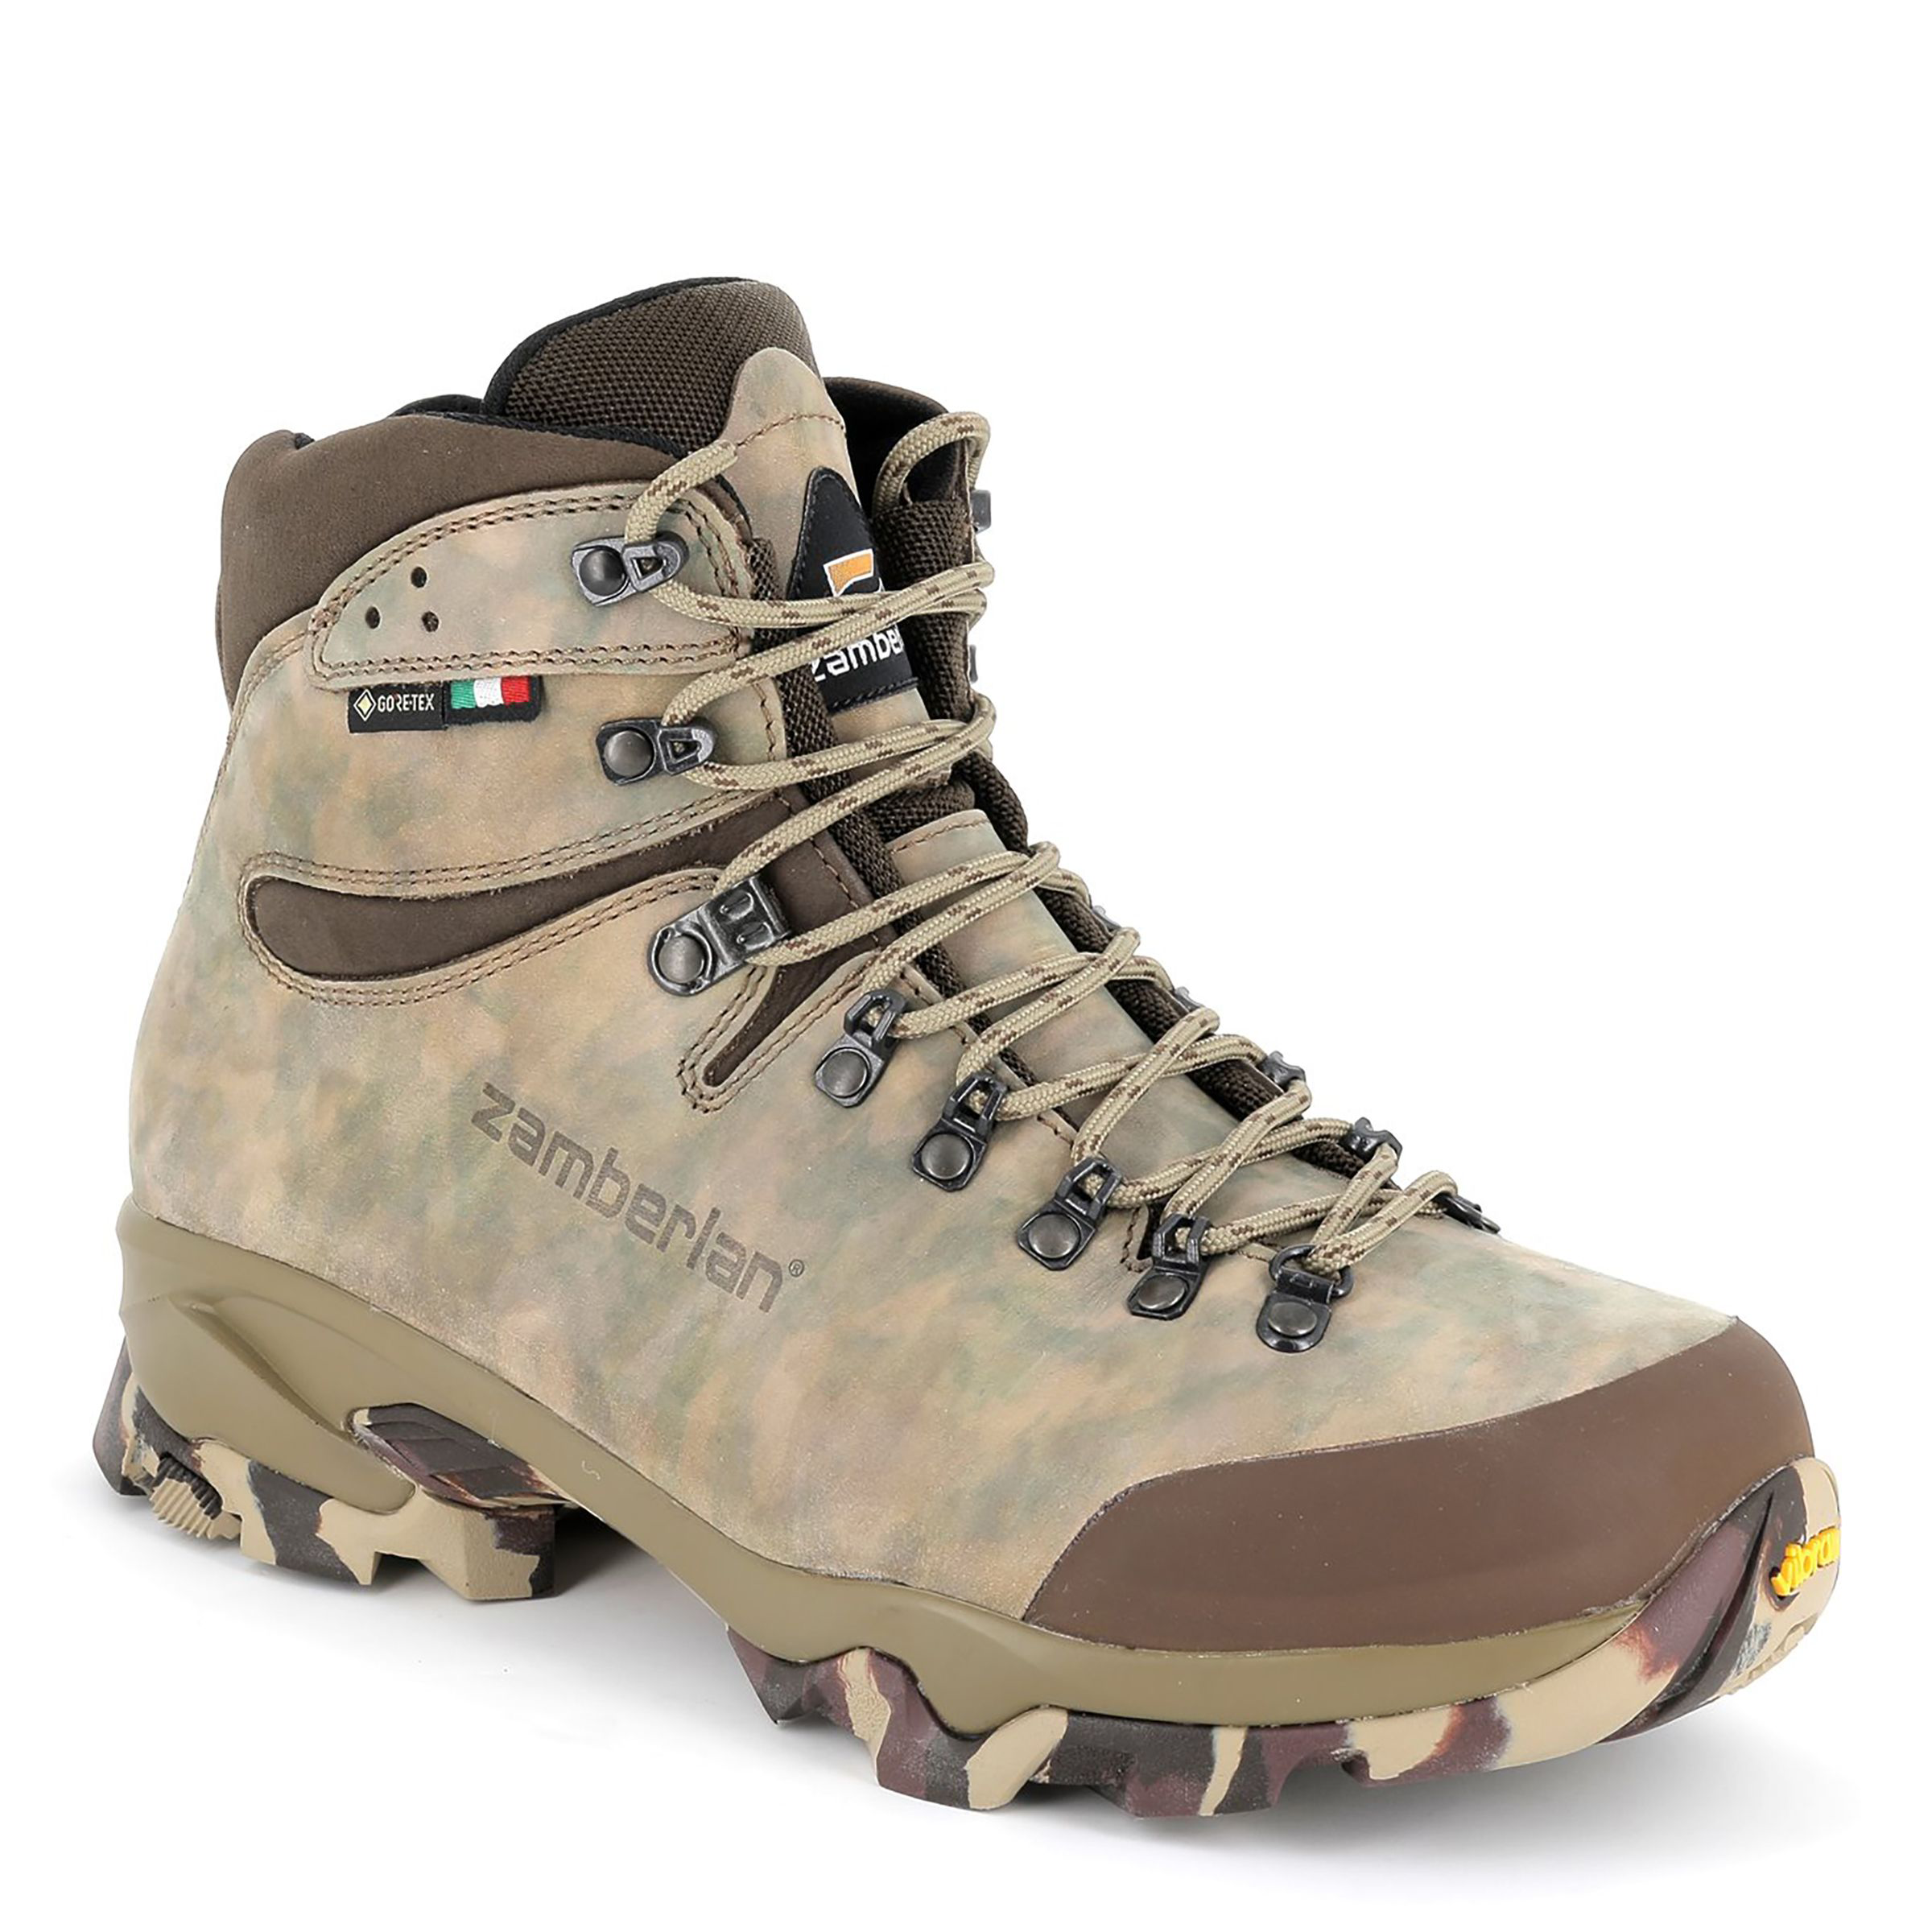 Zamberlan 1213 Leopard GTX RR GORE-TEX Hunting Boots for Men - Beige - 14M